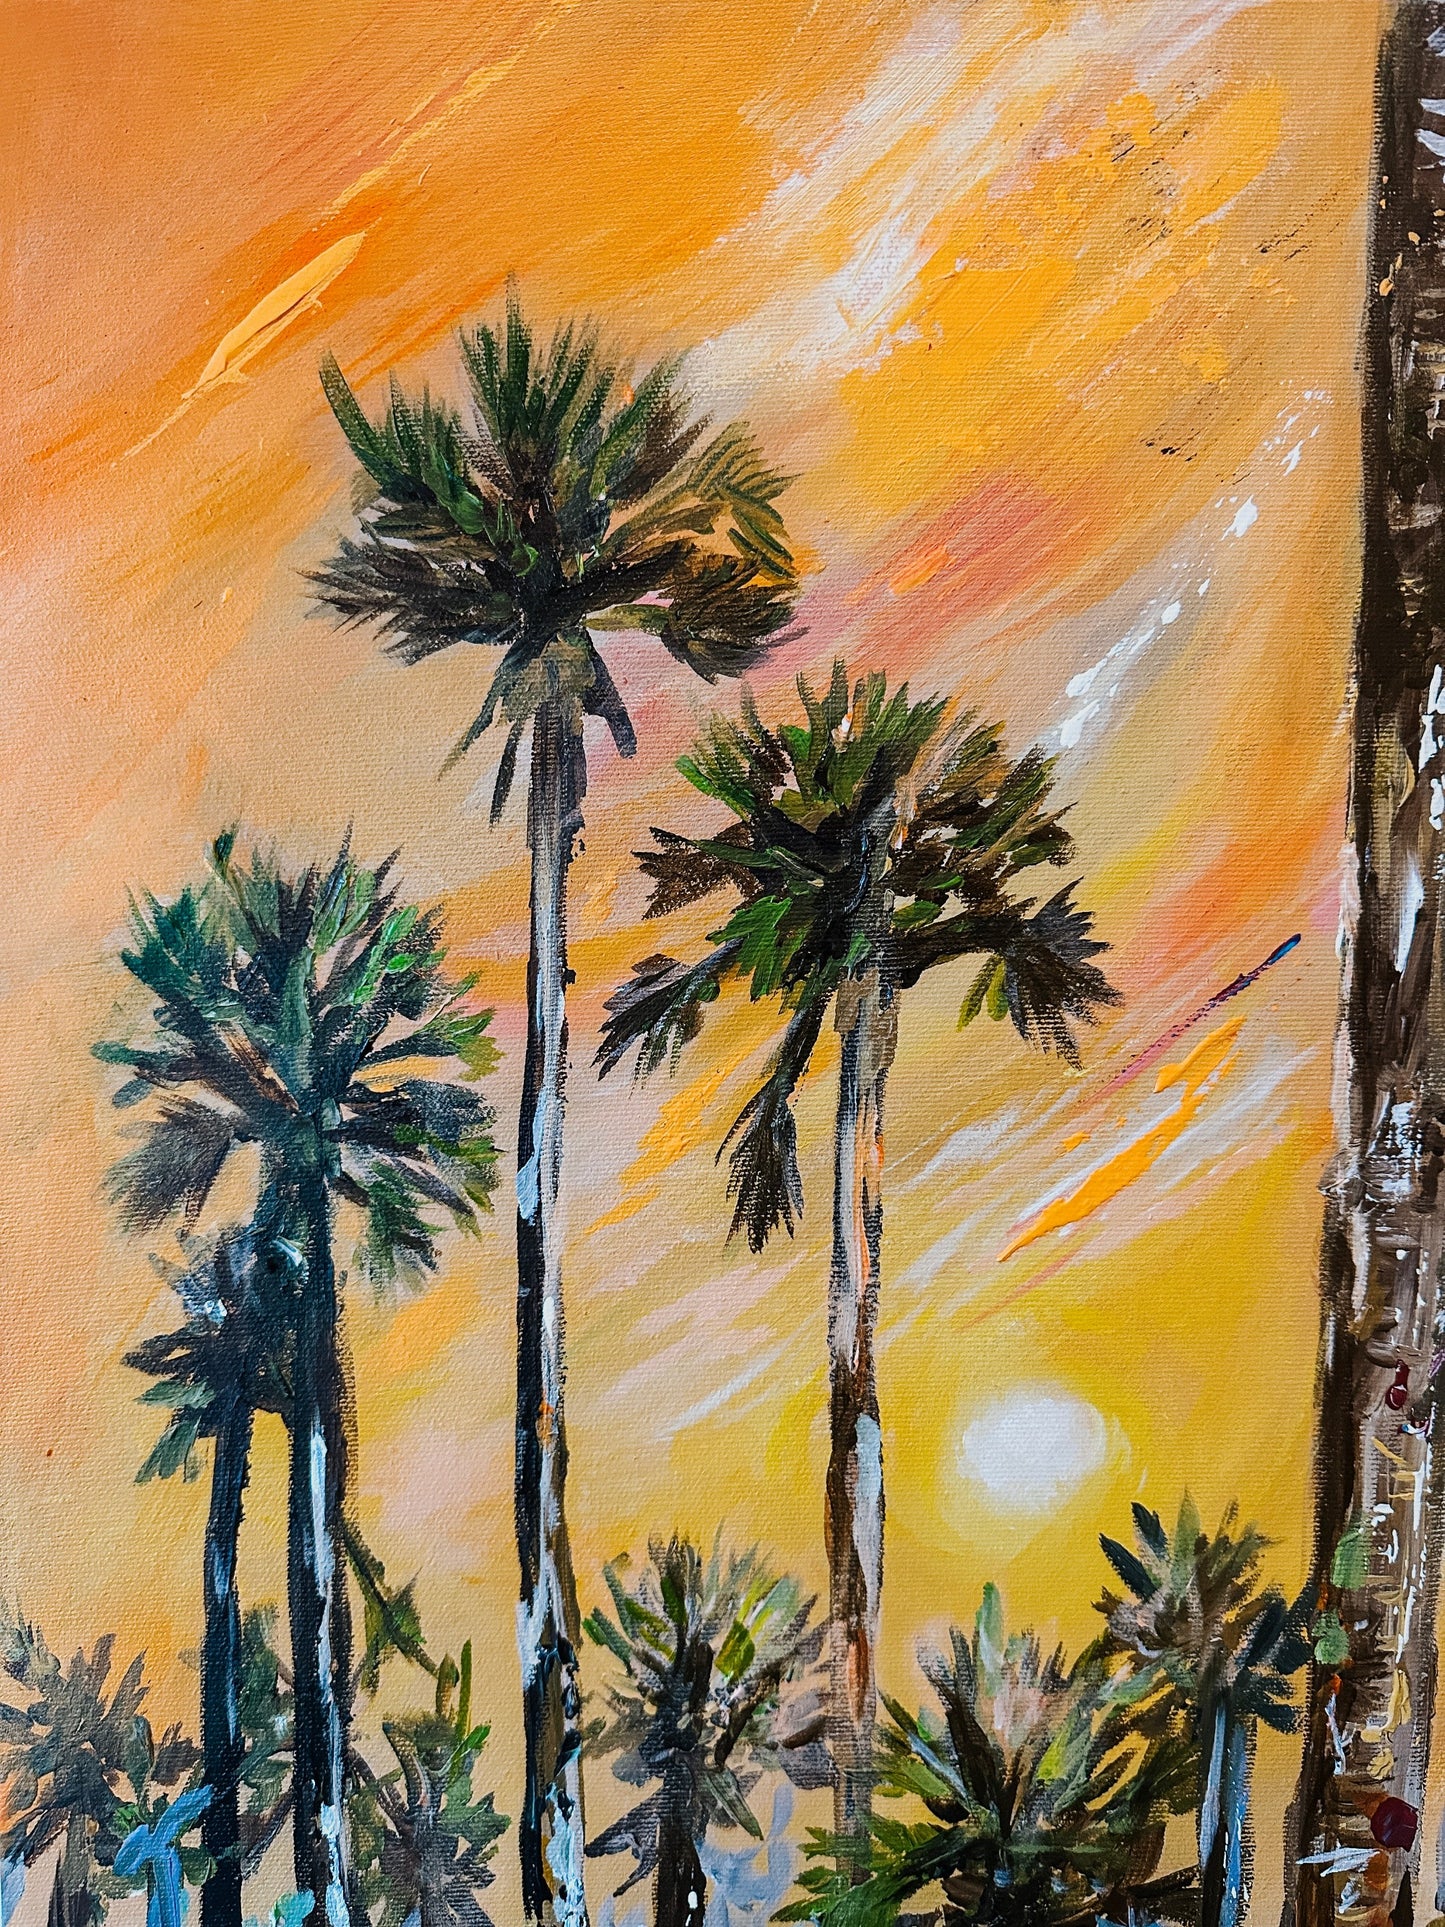 Palmyra Trees At Sunset - 5 Panel Travel Series' - Landscape Print